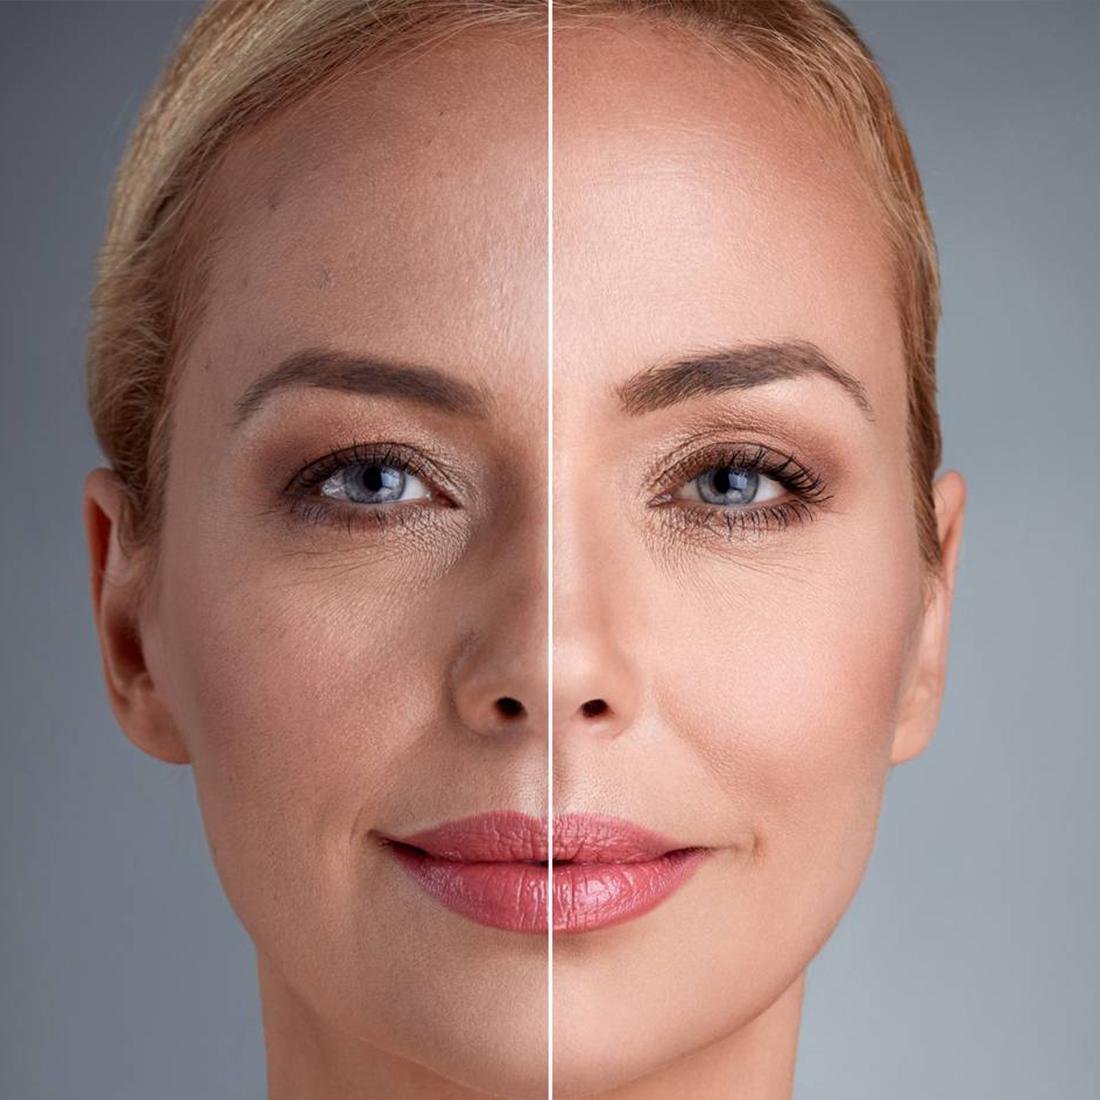 Rejuvenation and facial correction